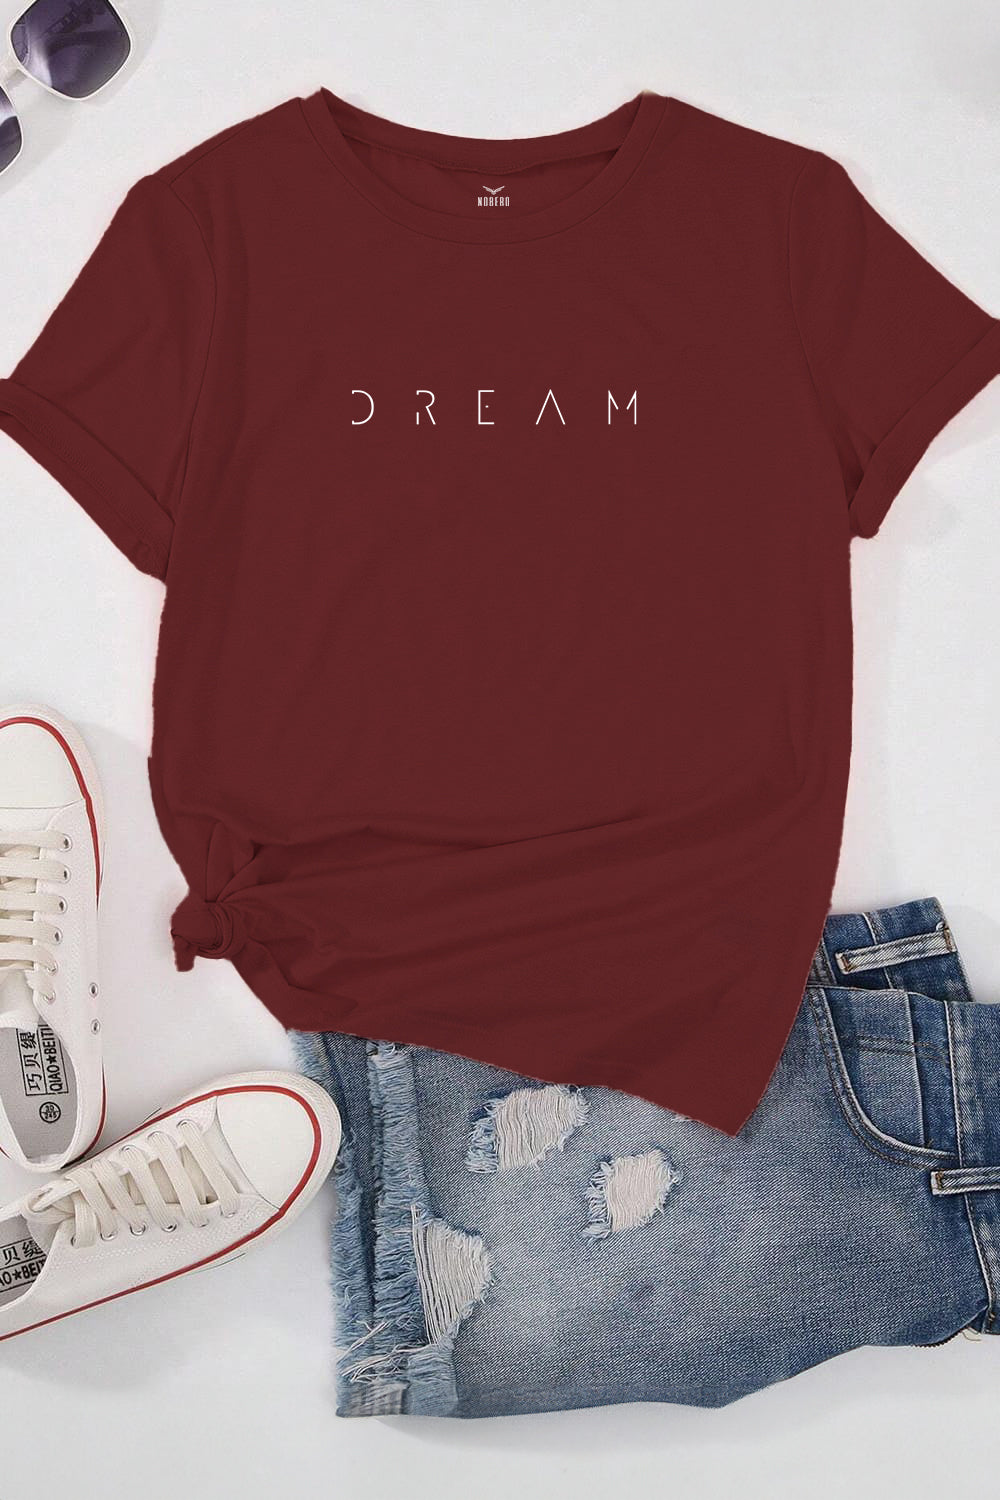 Boyfriend Dream Classic Fit T-Shirt